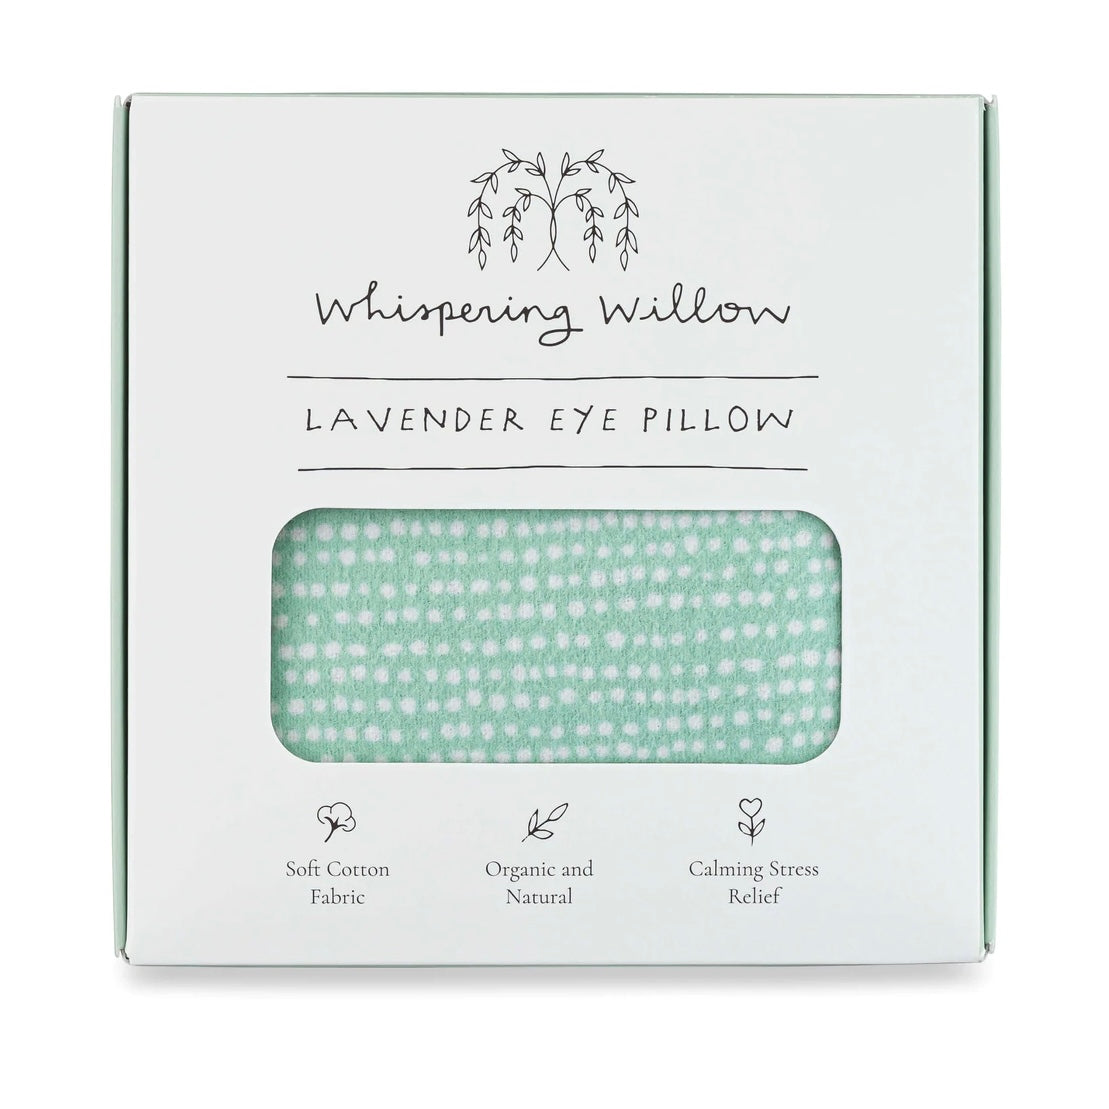 Fern & Willow Pillow Review